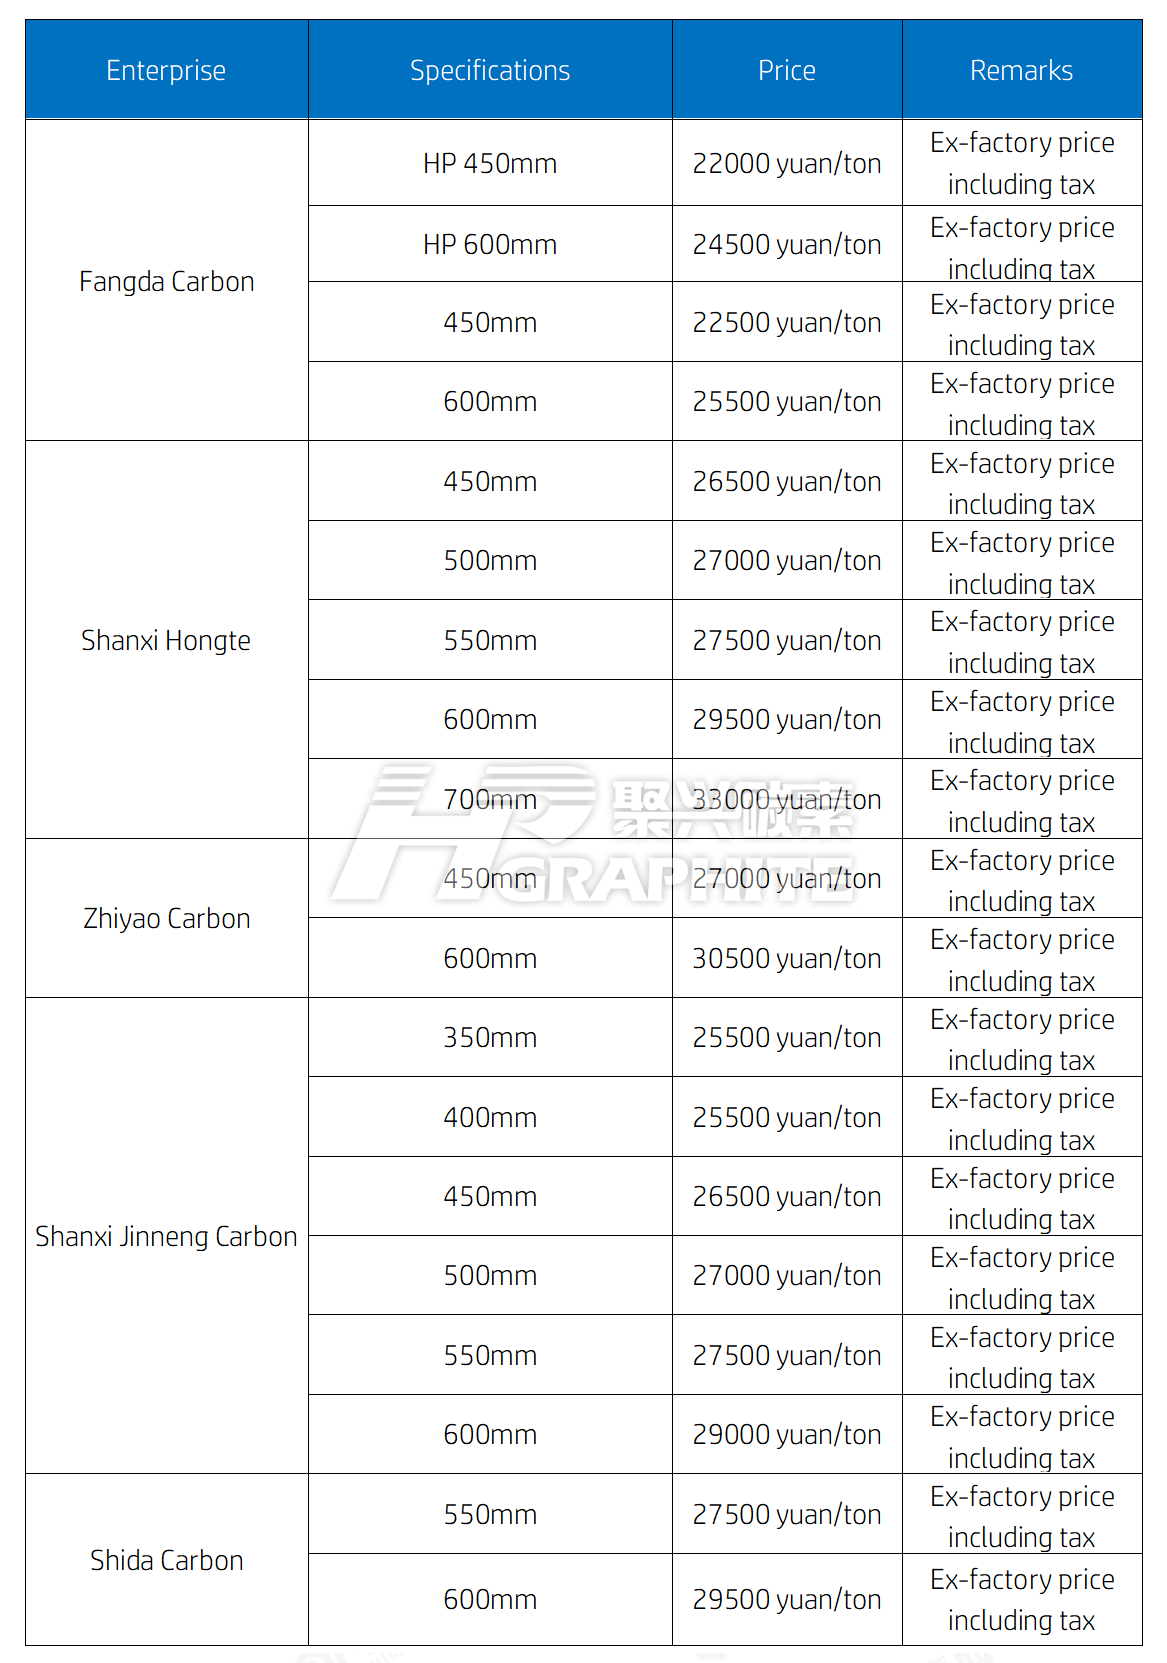 Graphite electrode enterprises price list.png